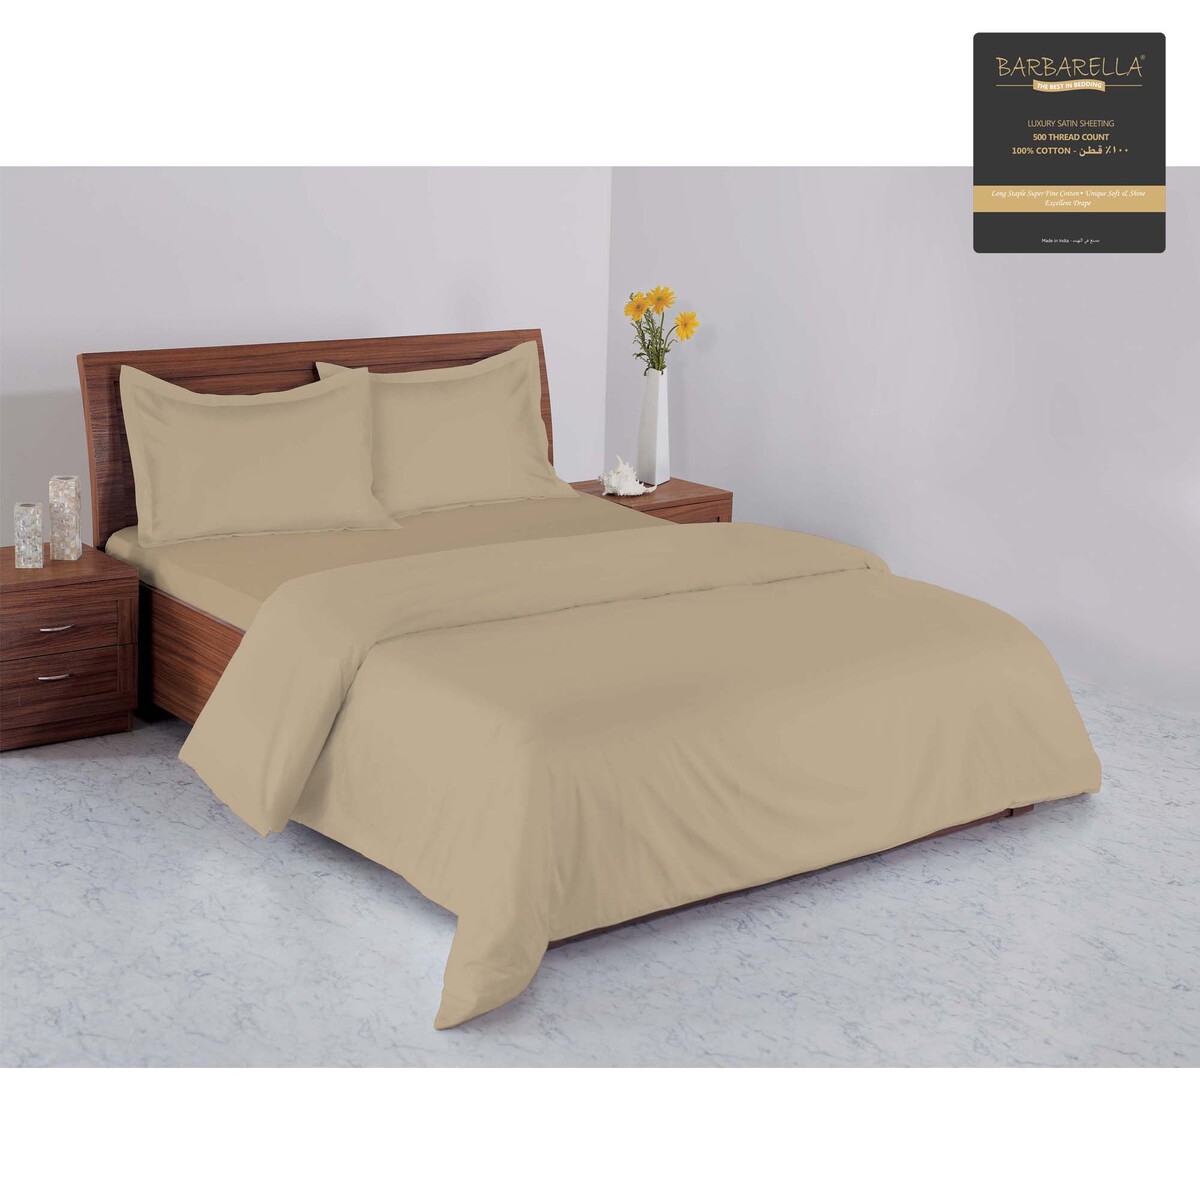 Barbarella Bed Sheet 160x240cm Brown 500tc Online At Best Price Bed Sheets Lulu Uae 8472